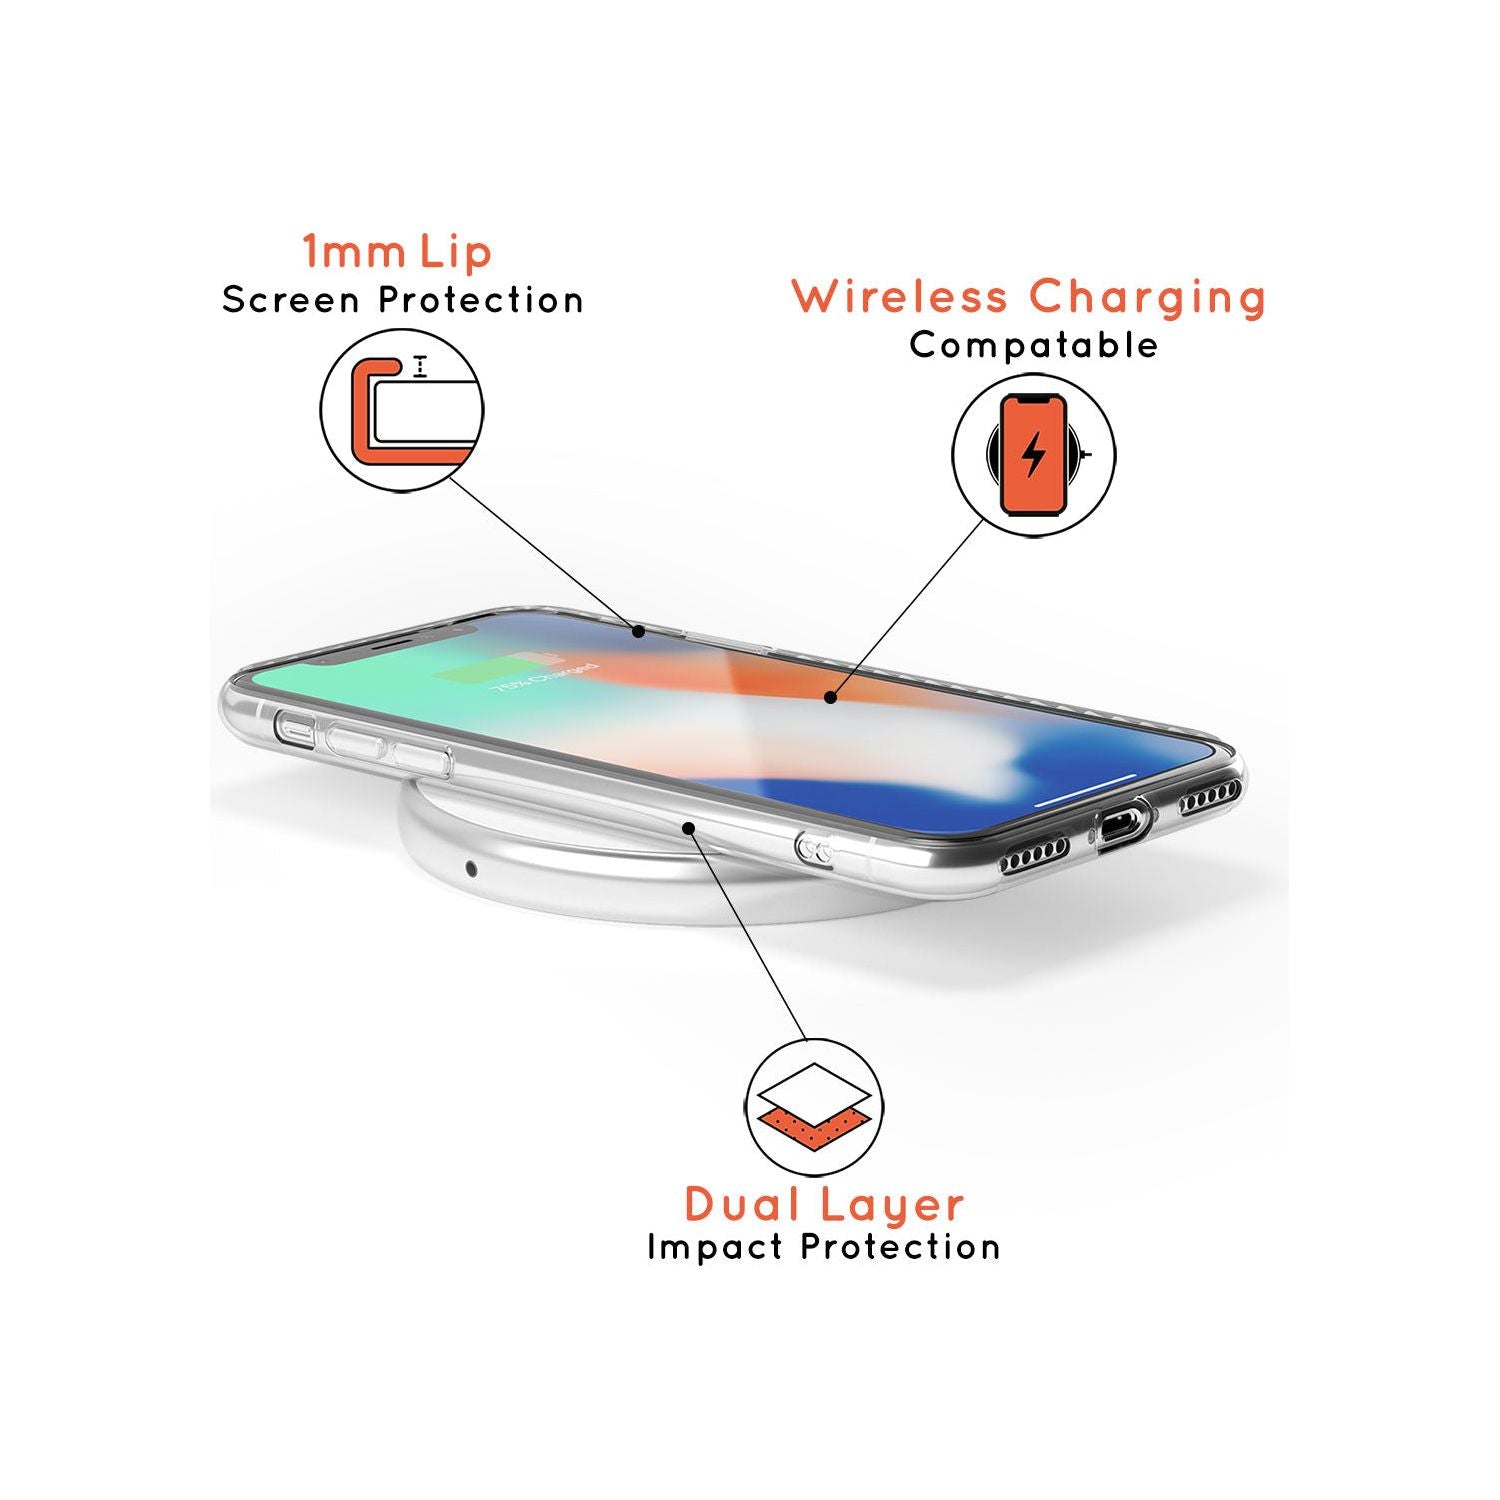 Large White Mandala Transparent Design Black Impact Phone Case for iPhone 11 Pro Max